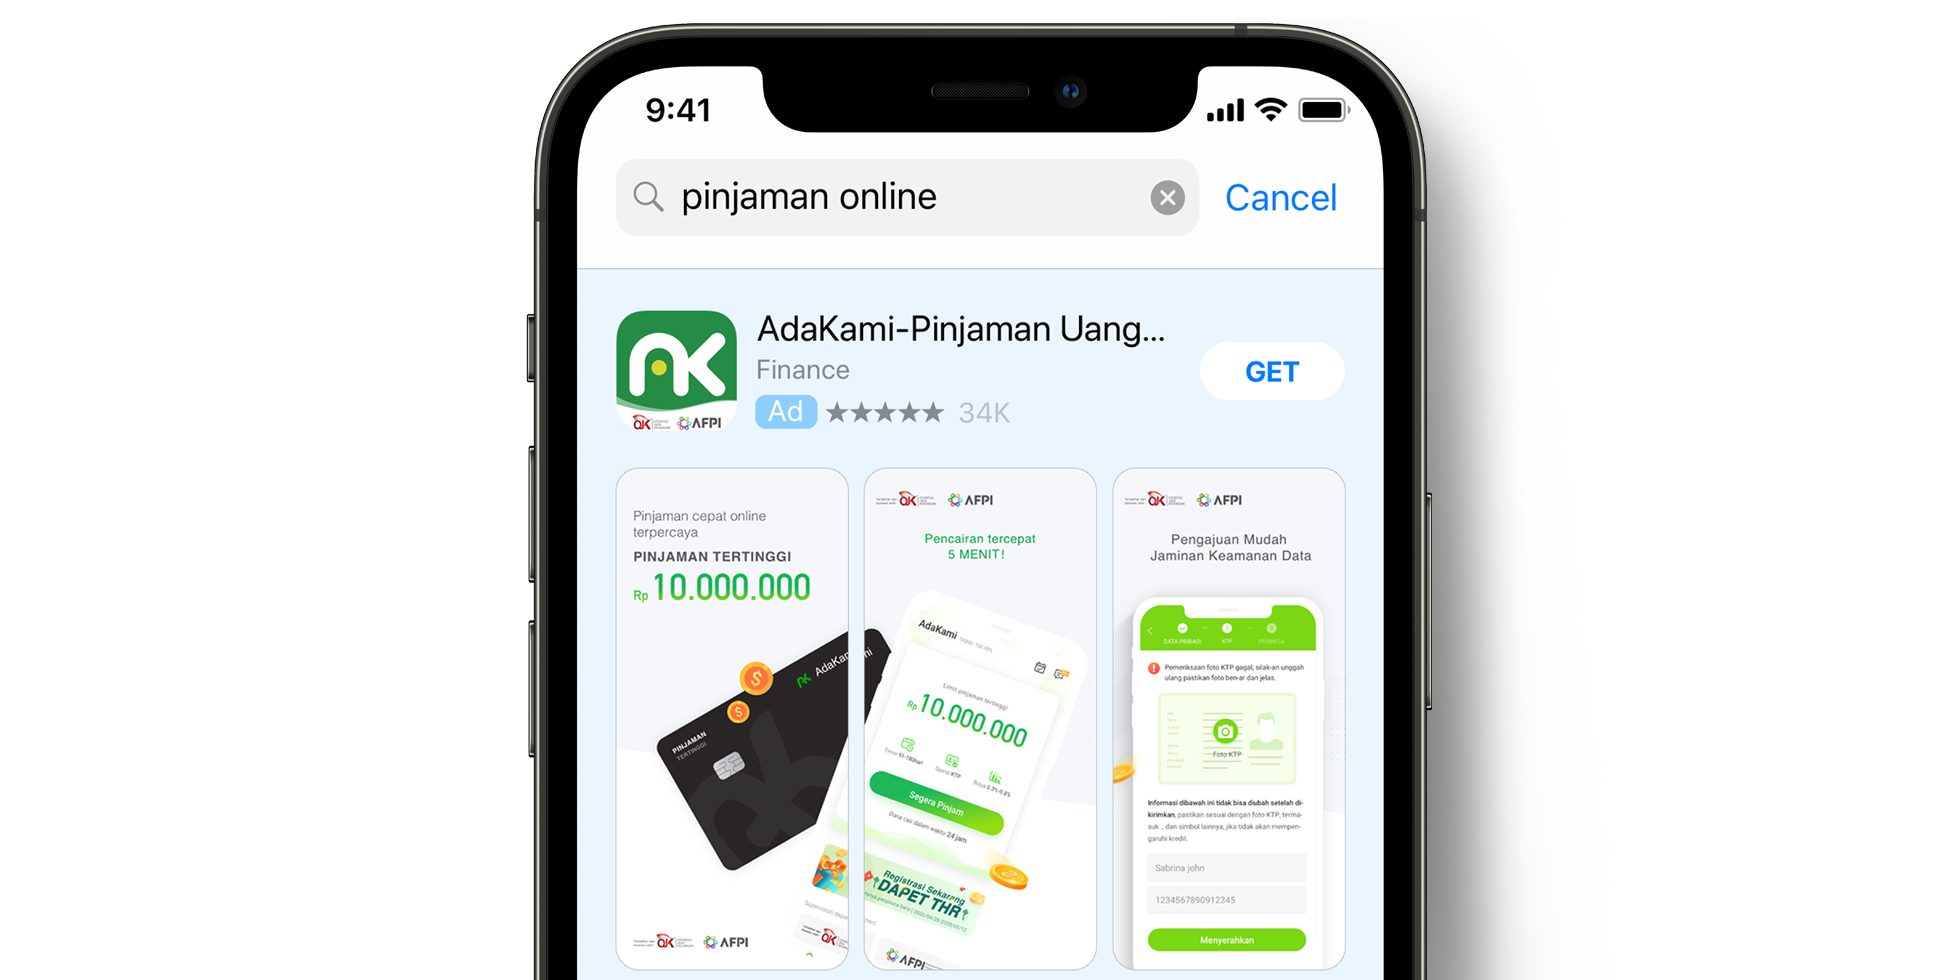 AdaKami 在 App Store 上投放的广告